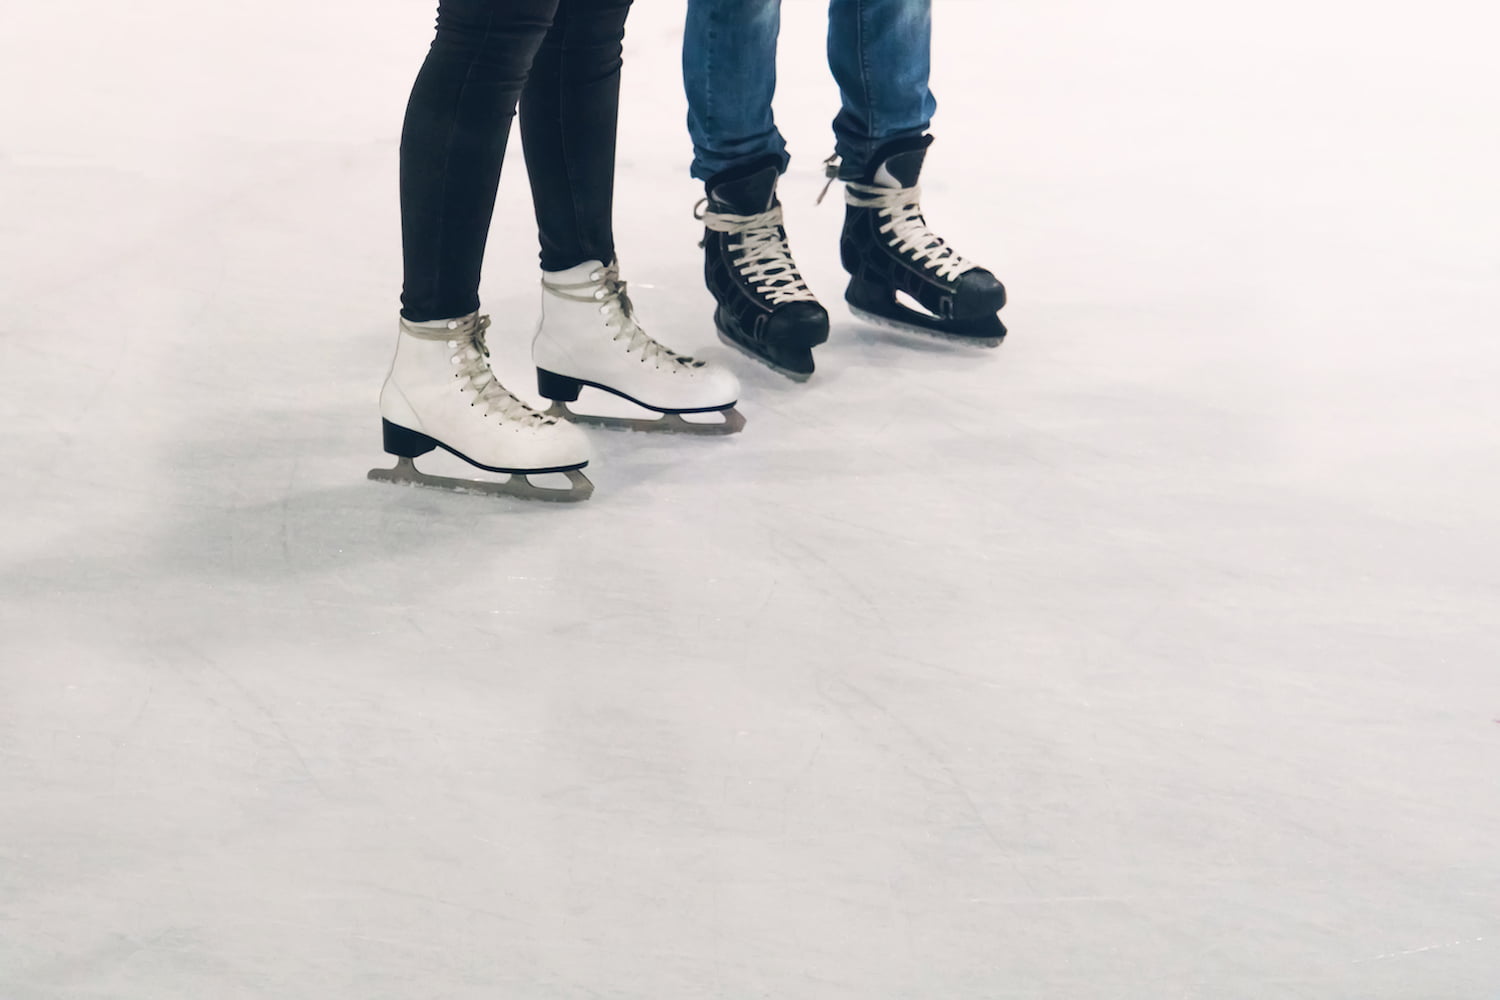 People ice skating in the Poconos.